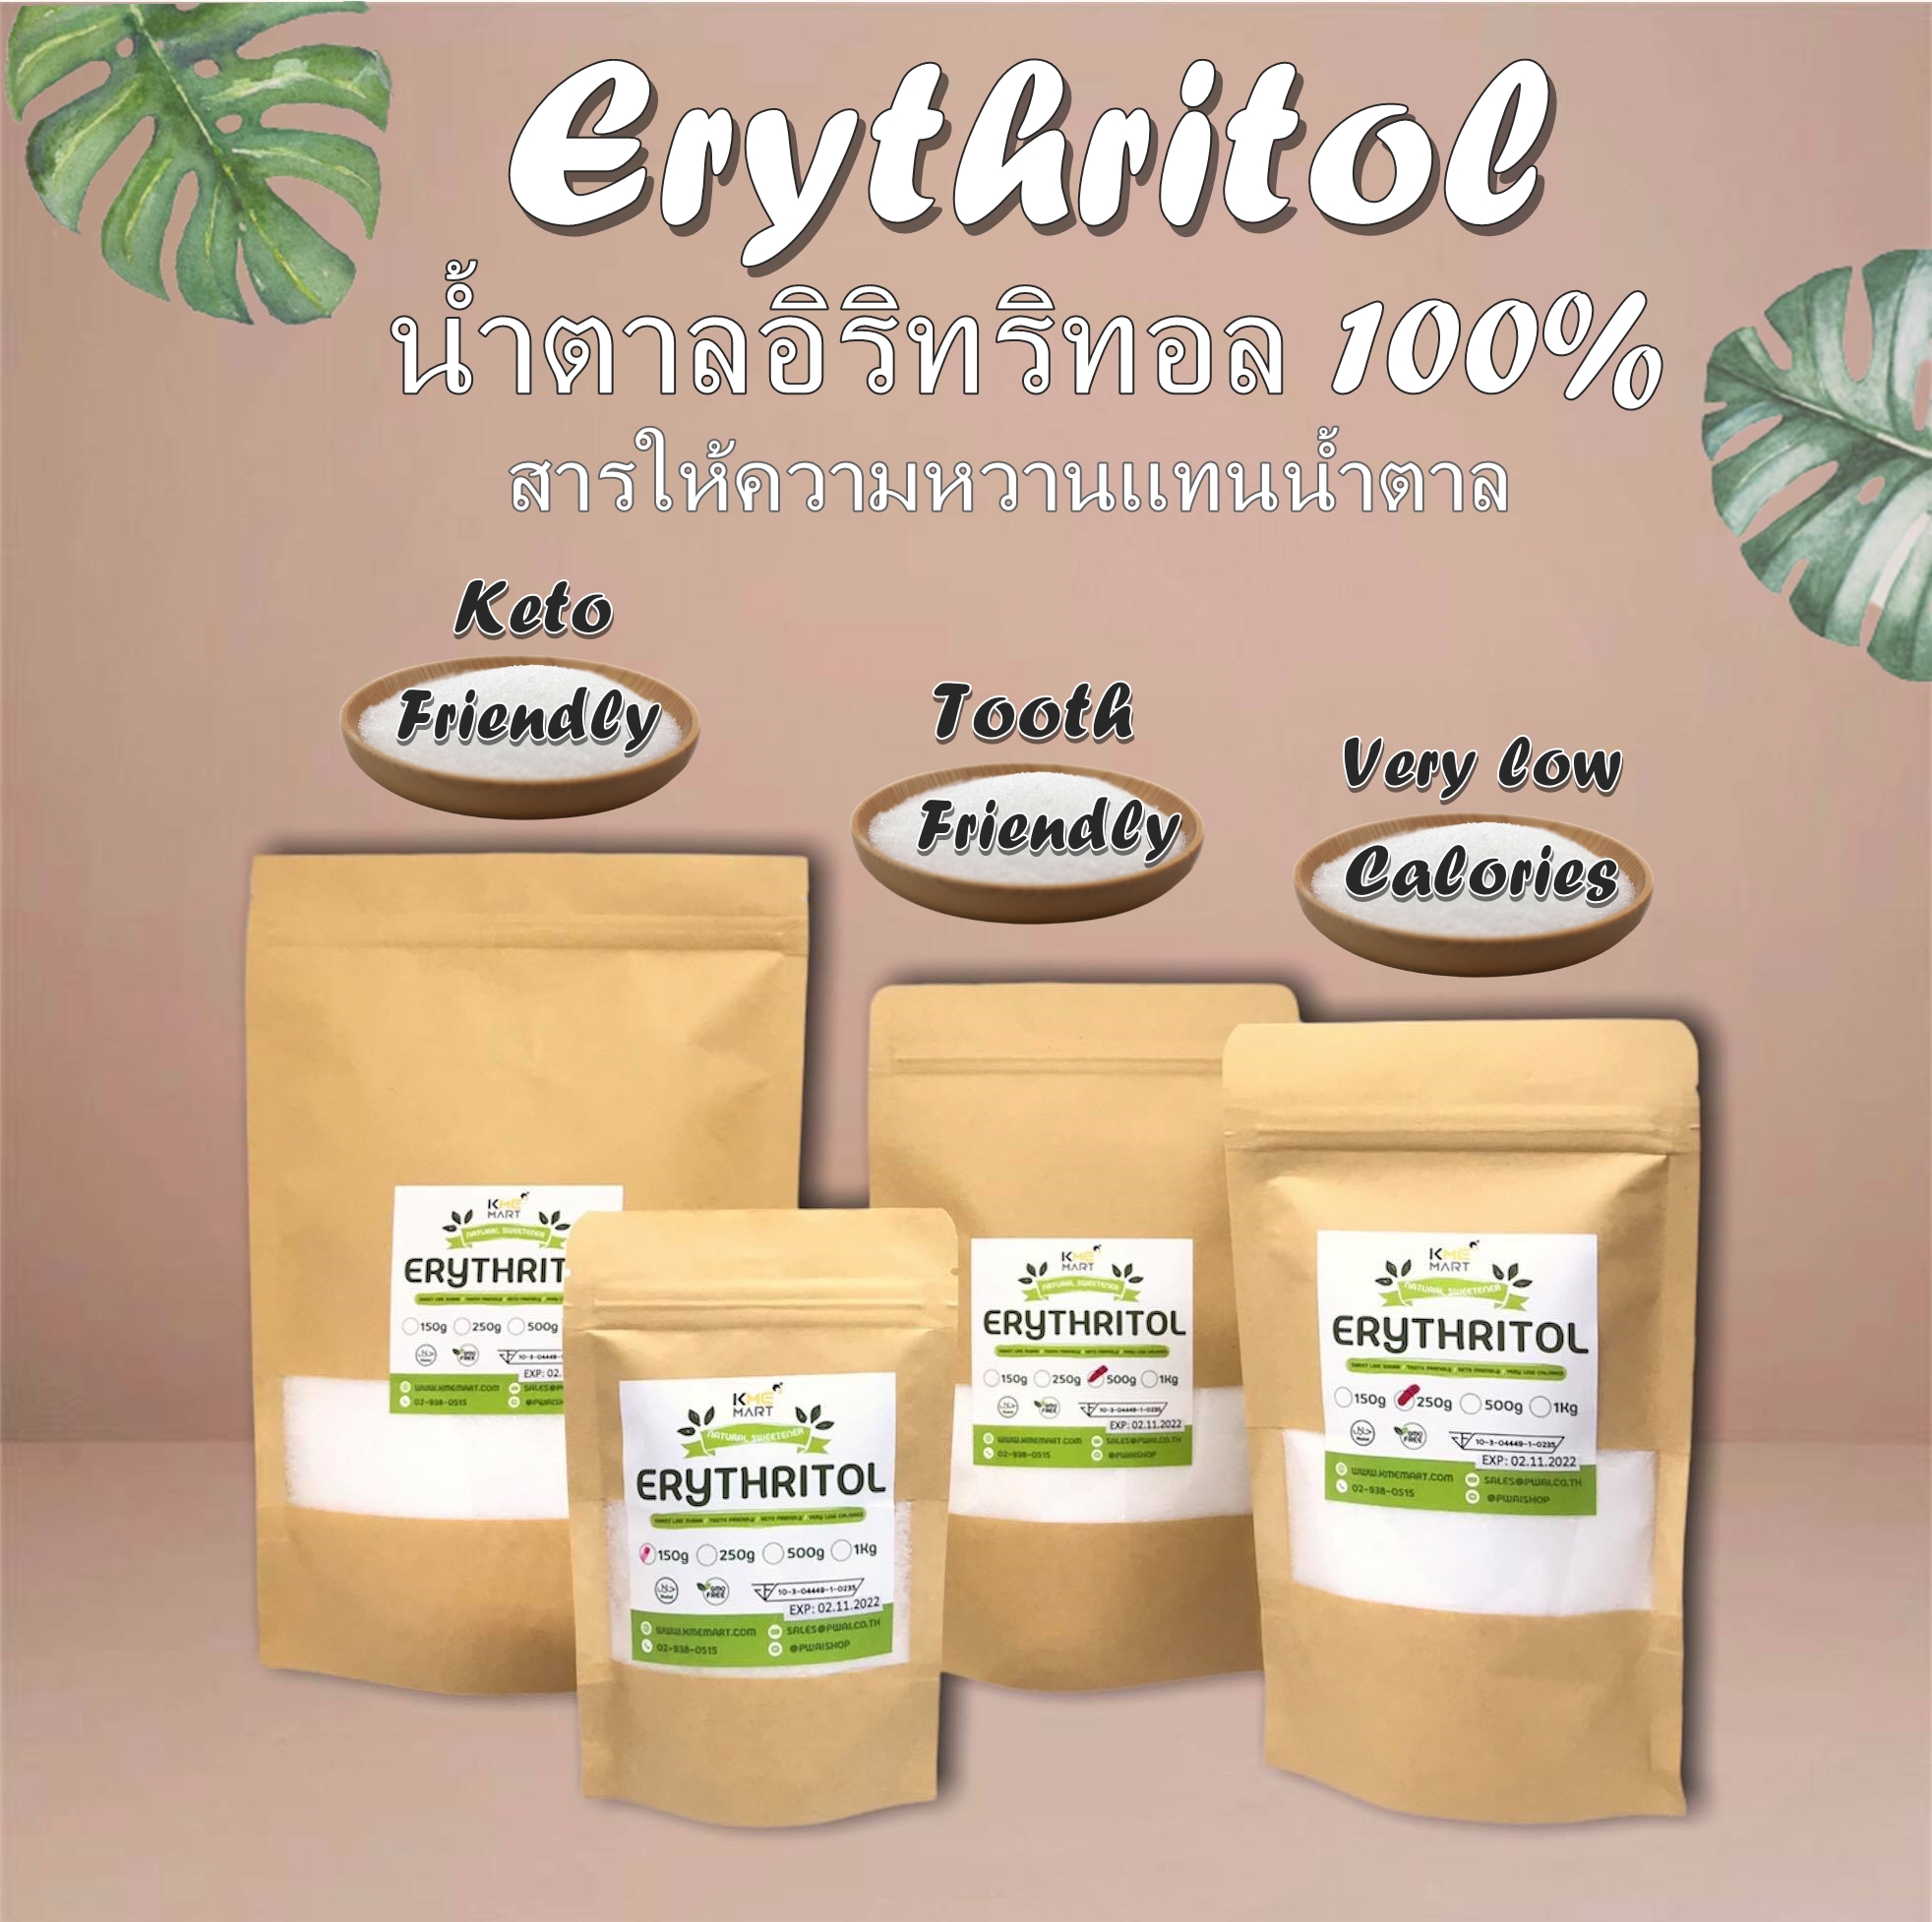 Erythitol น้ำตาลอิริทริทอล อิริธรีทอล น้ำตาลคีโต NON-GMO น้ำตาลแอลกอฮอล์ - 1 kg